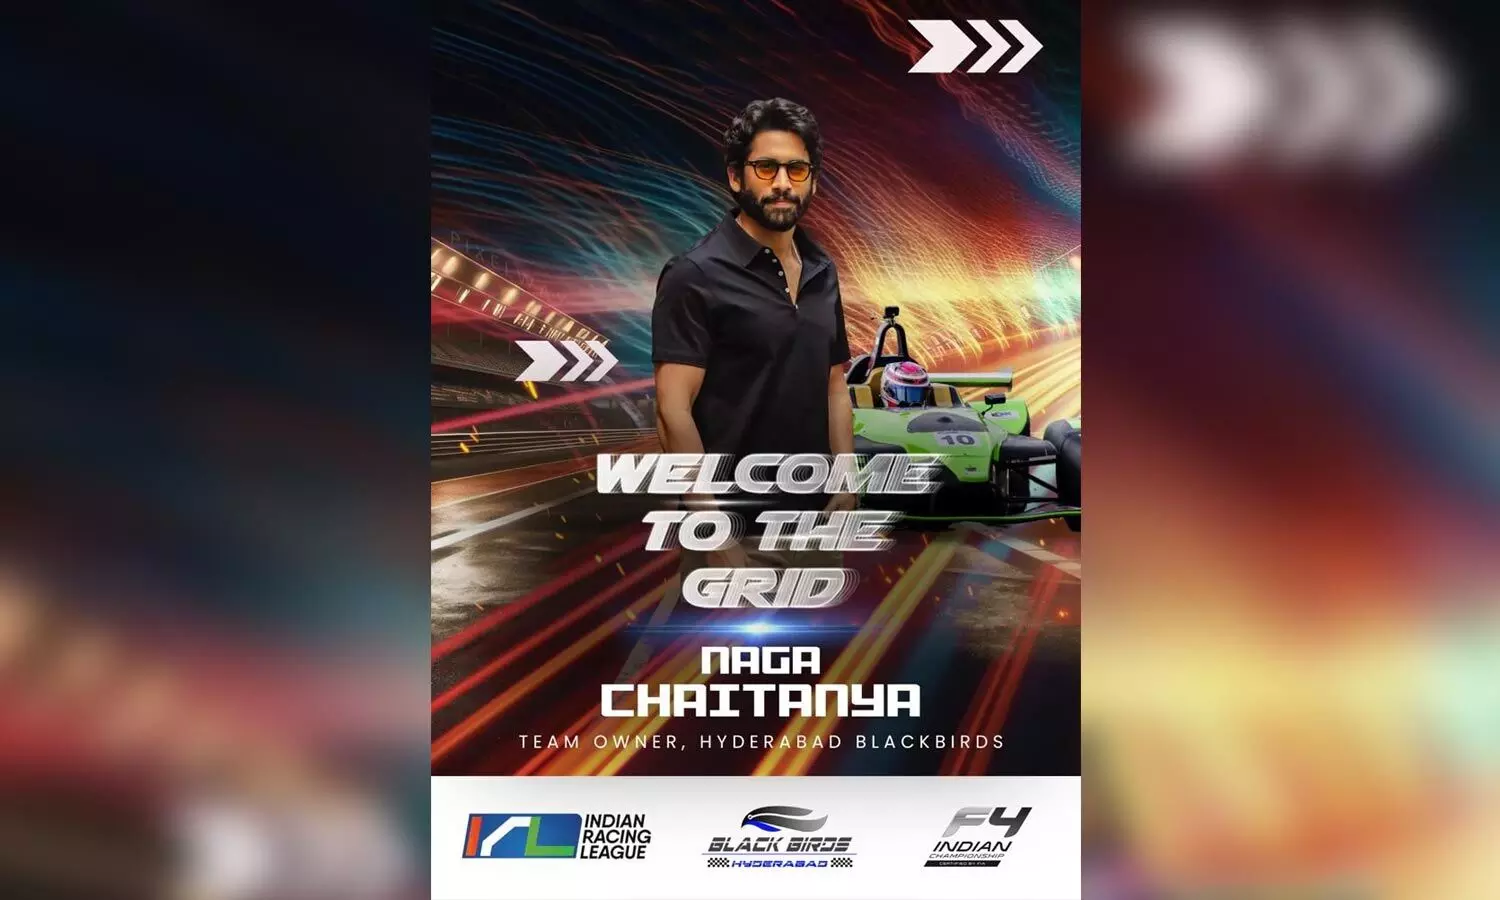 Naga Chaitanya acquires motorsport racing team - Hyderabad Blackbirds